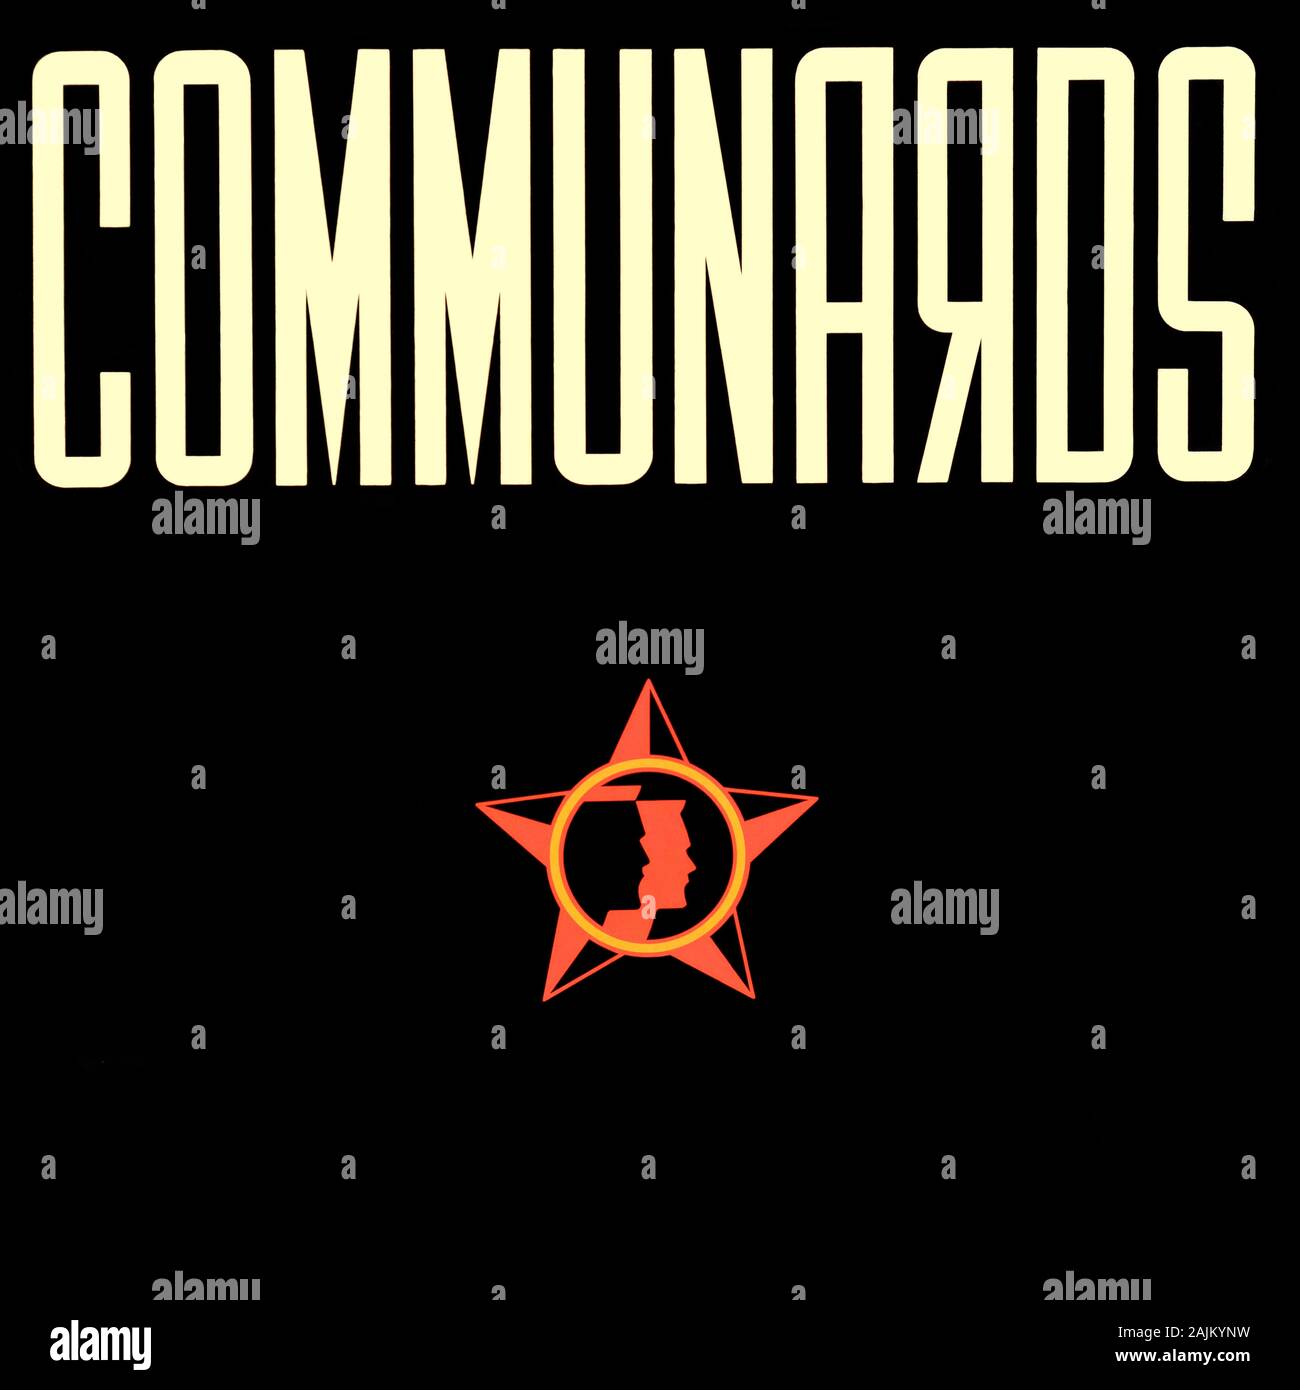 Communards - original Vinyl Album Cover - Communards - 1986 Stockfoto